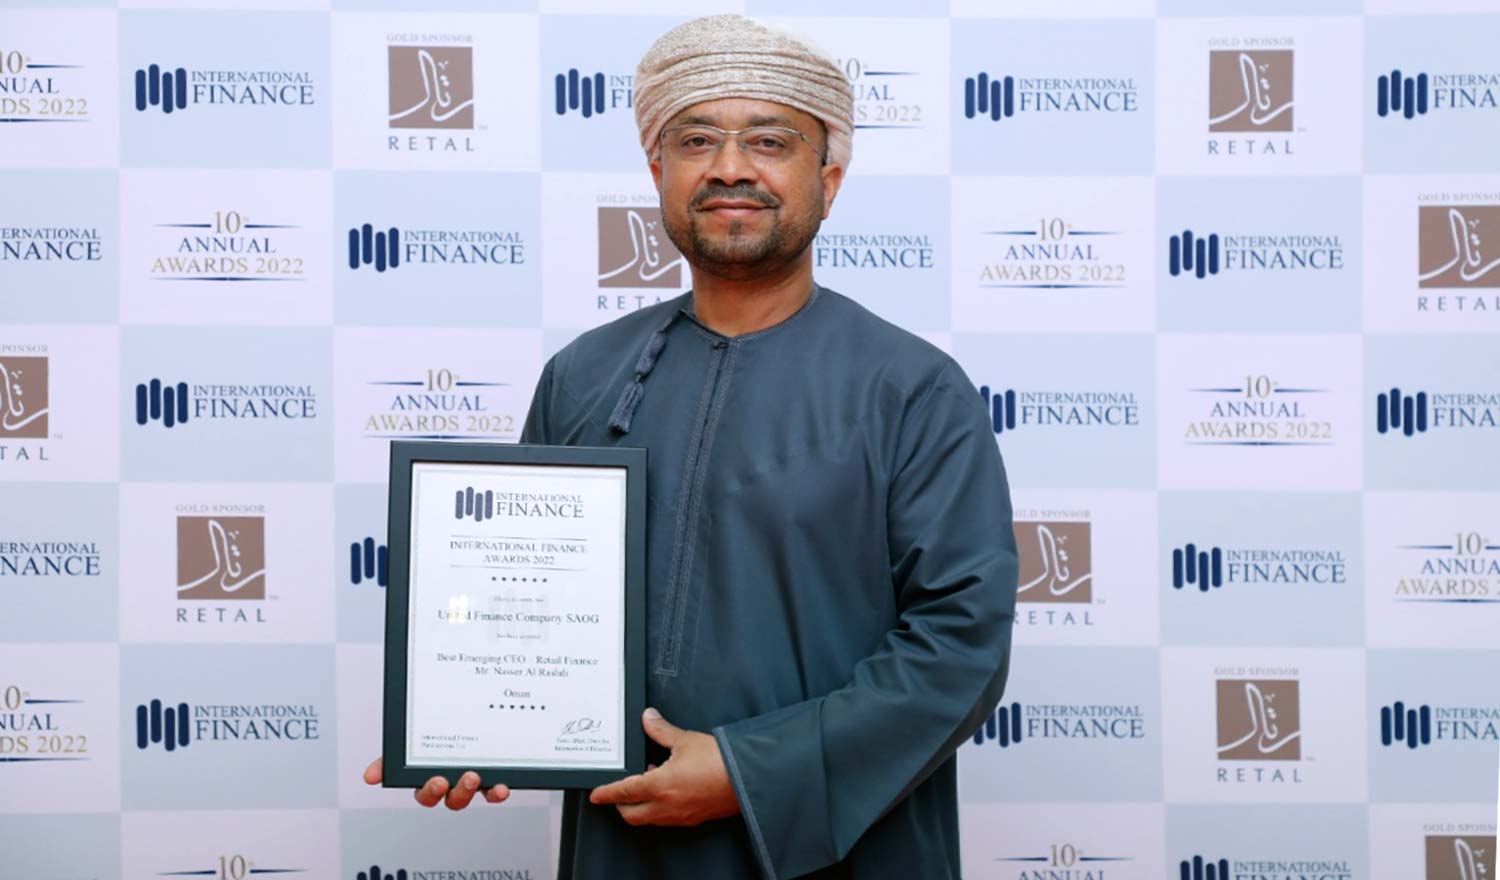 Nasser Al Rashdi awarded “Best Emerging CEO – Retail Finance” by International Finance Awards 2022.